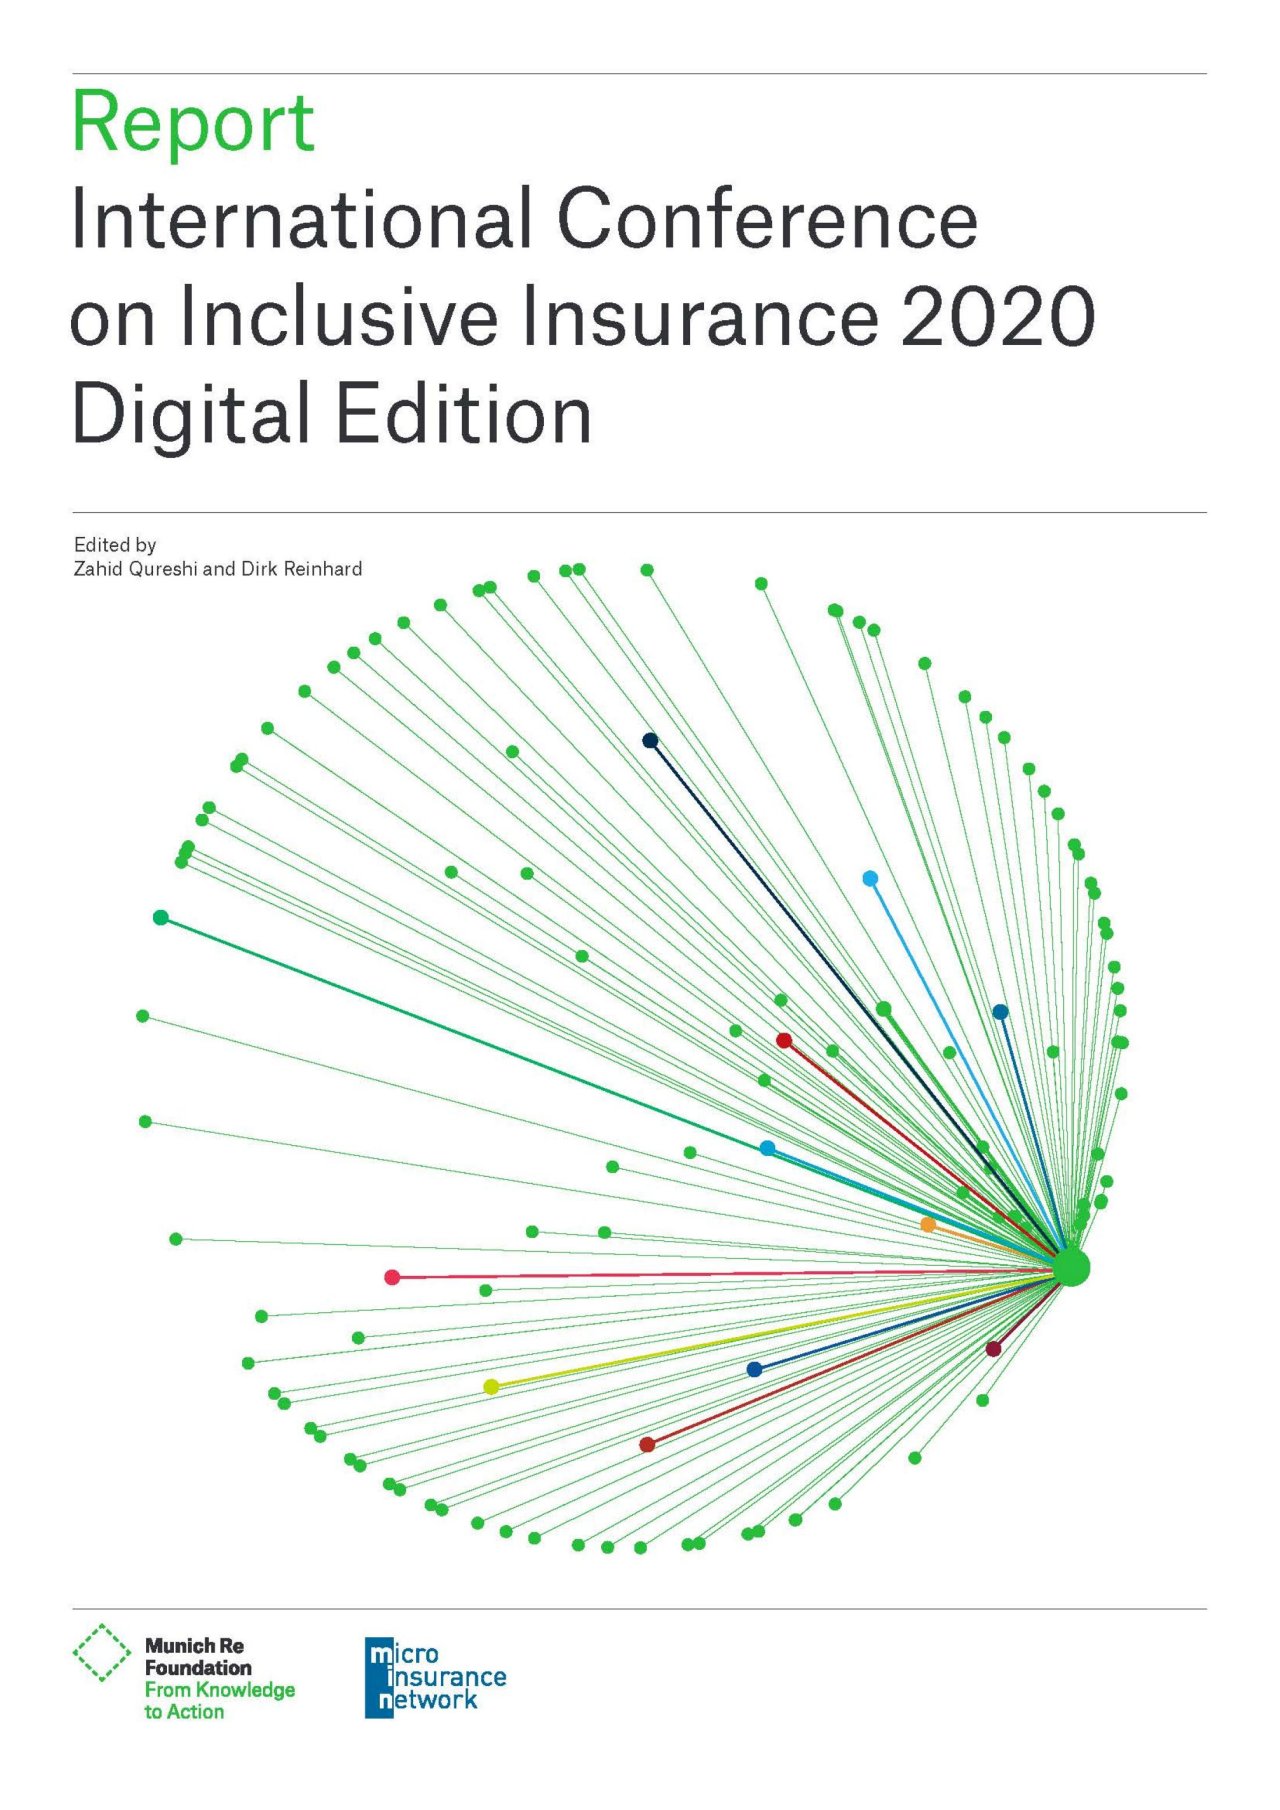 Download report - ICII 2020 - Digital Edition